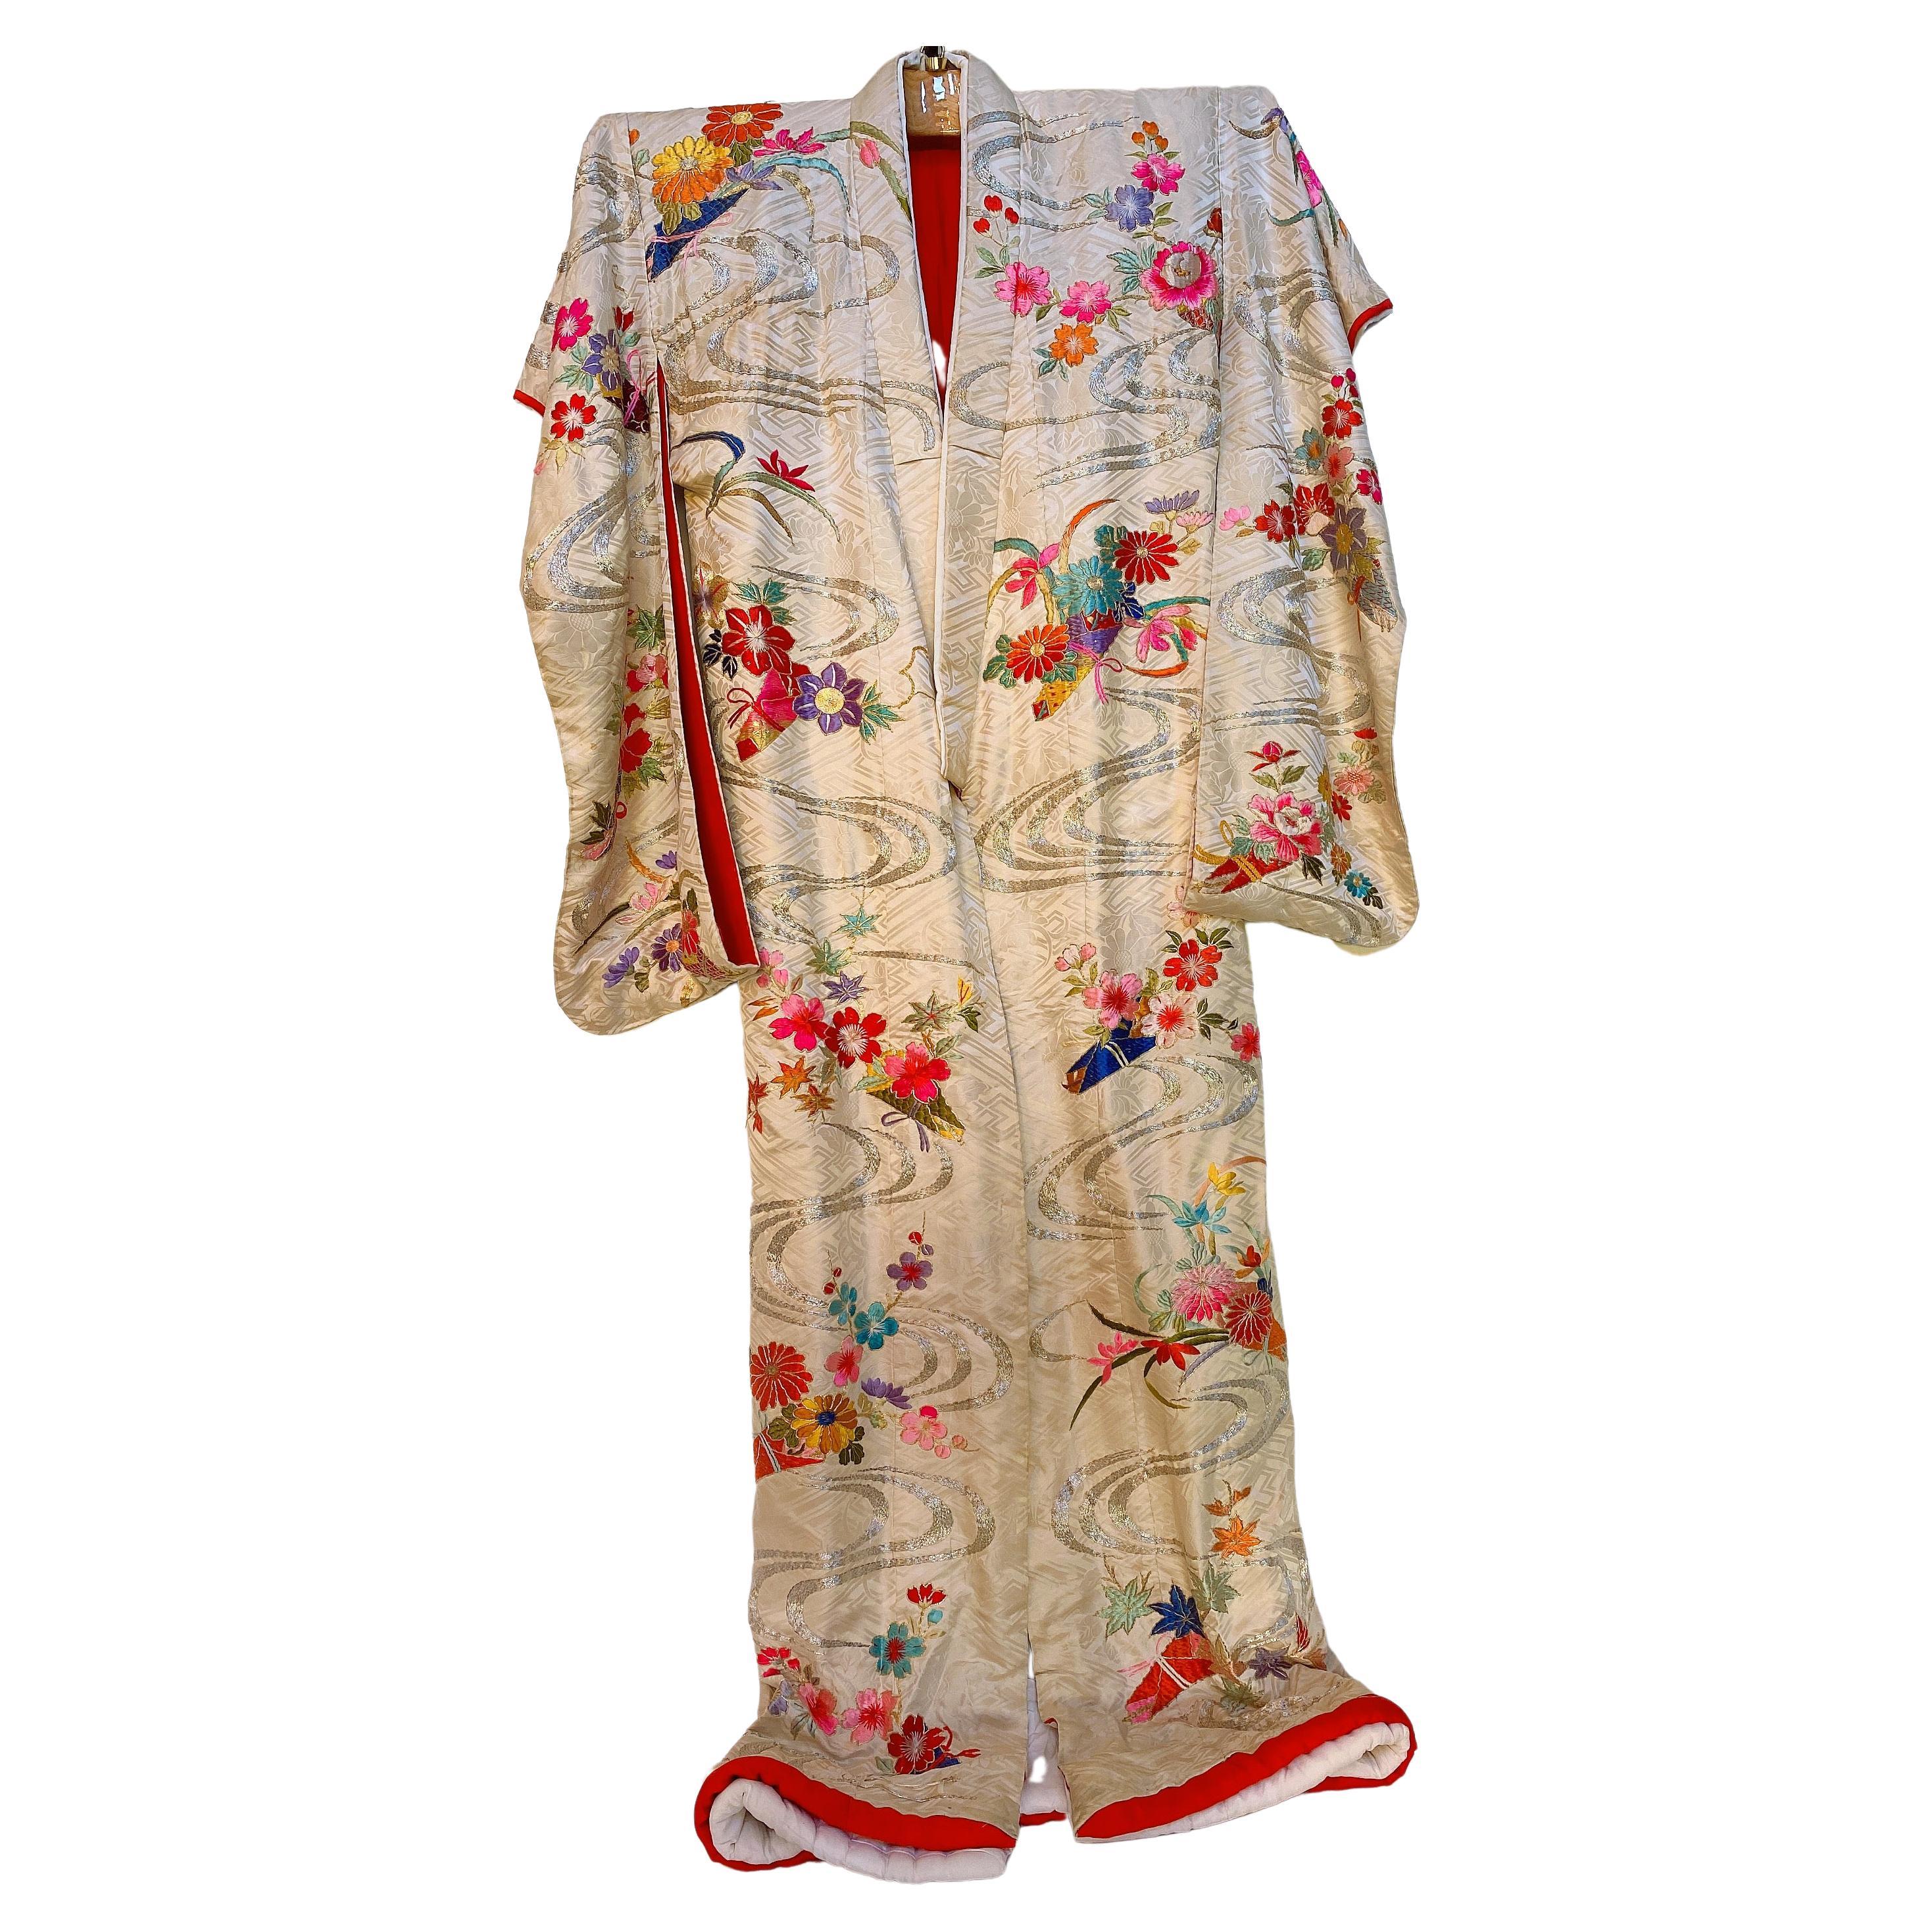 Rare Spectacular Hand-Embroidered Silk Japanese Kimono